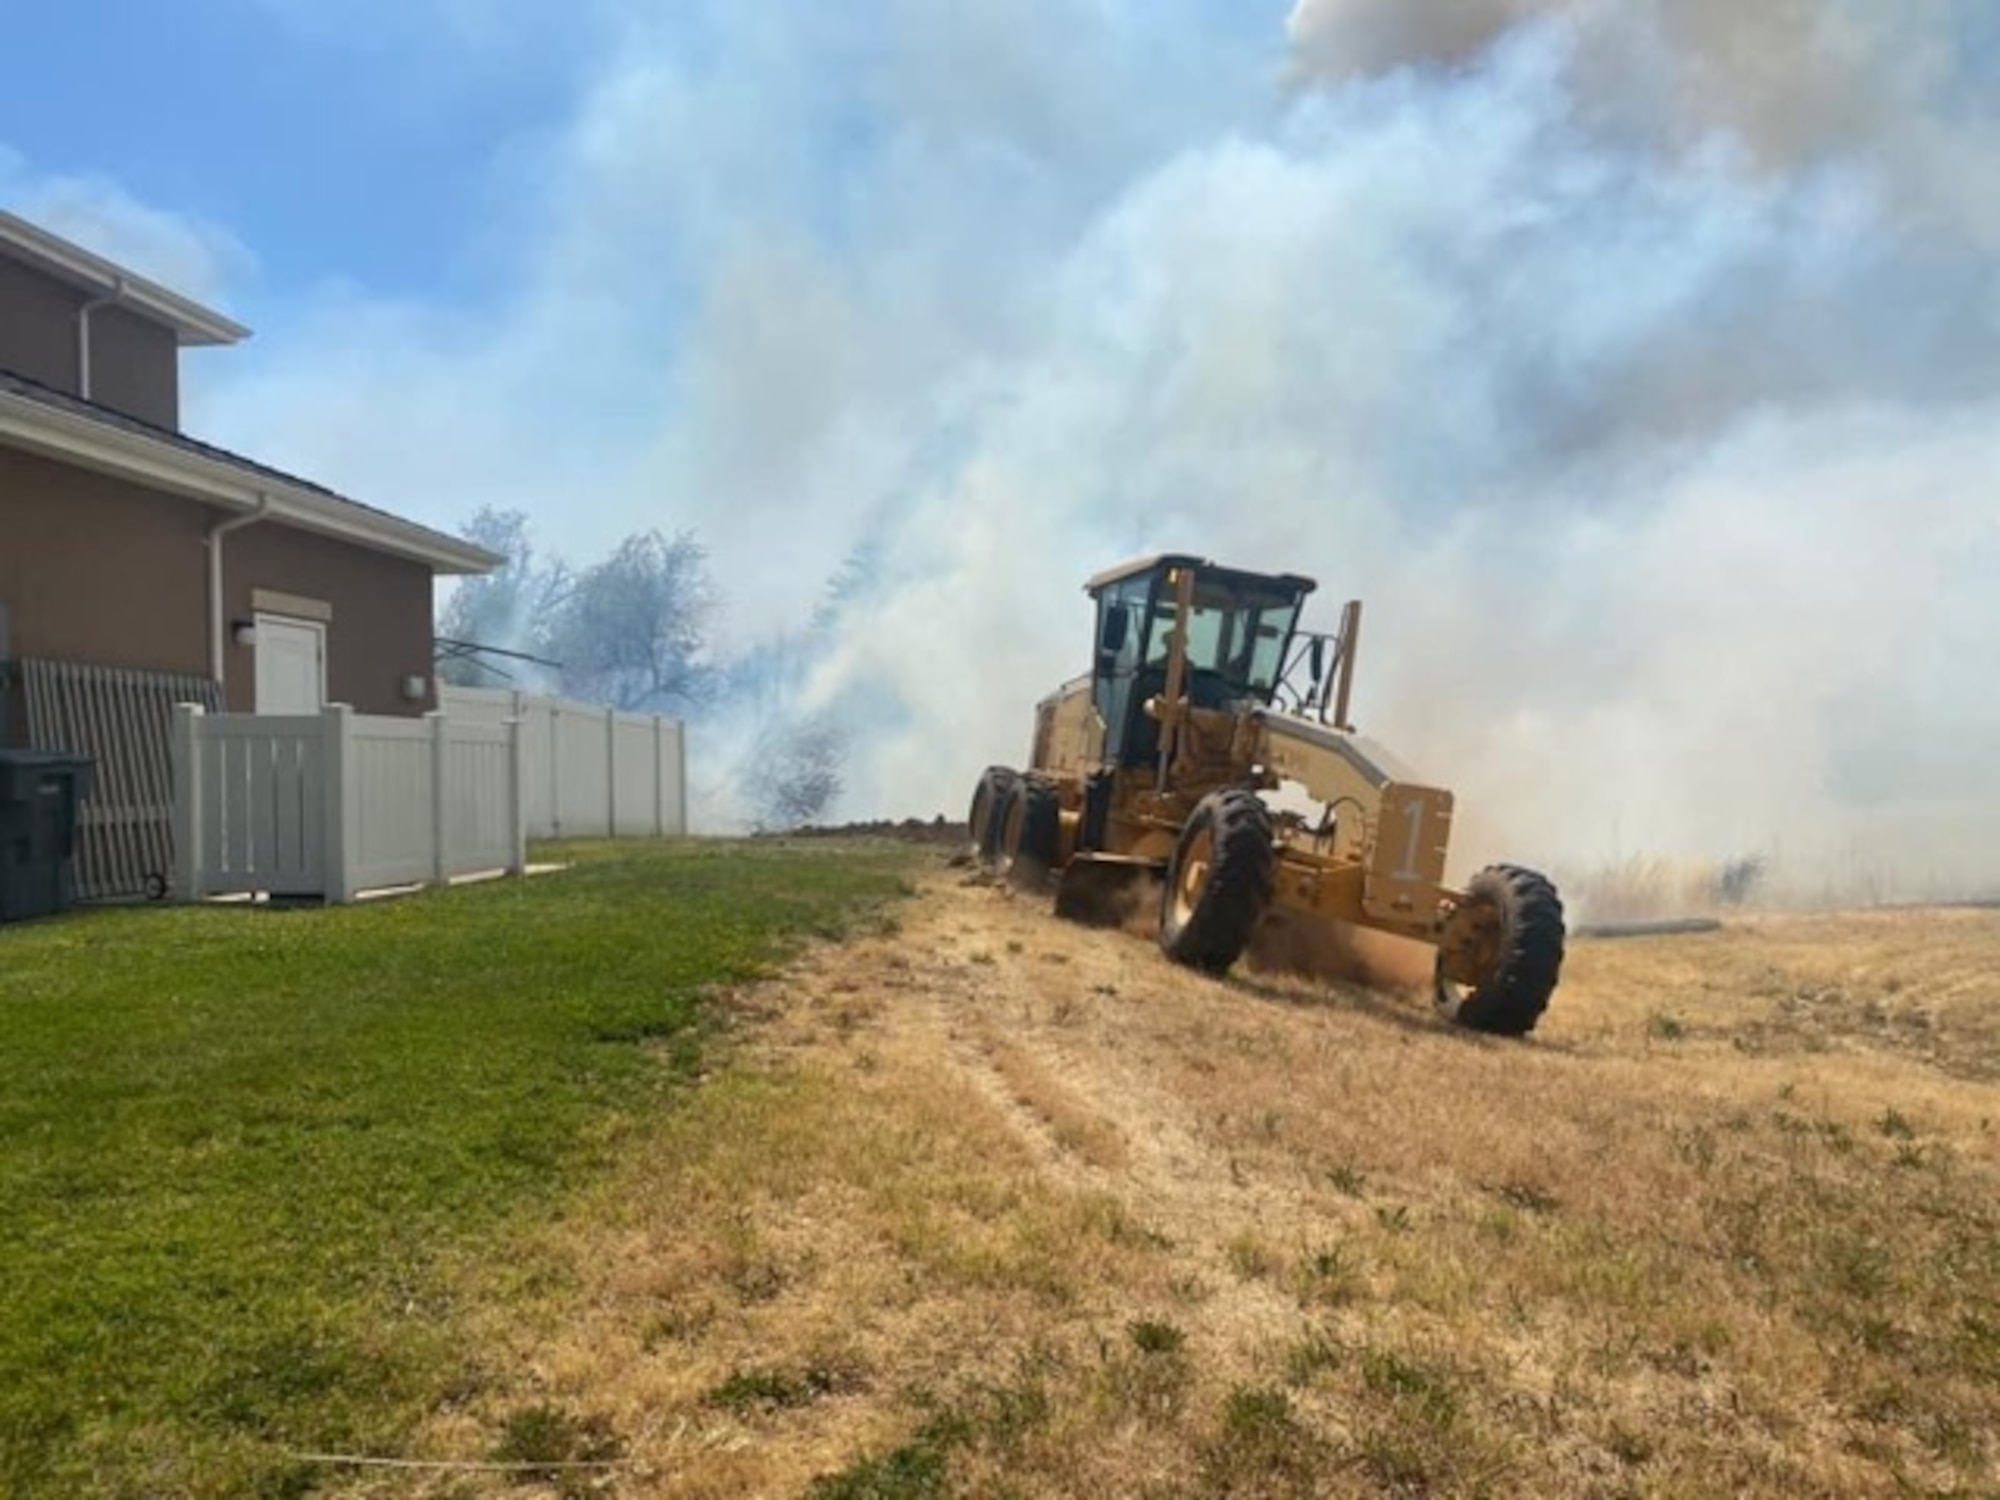 Wildland Fire Center creates fire breaks around residential areas